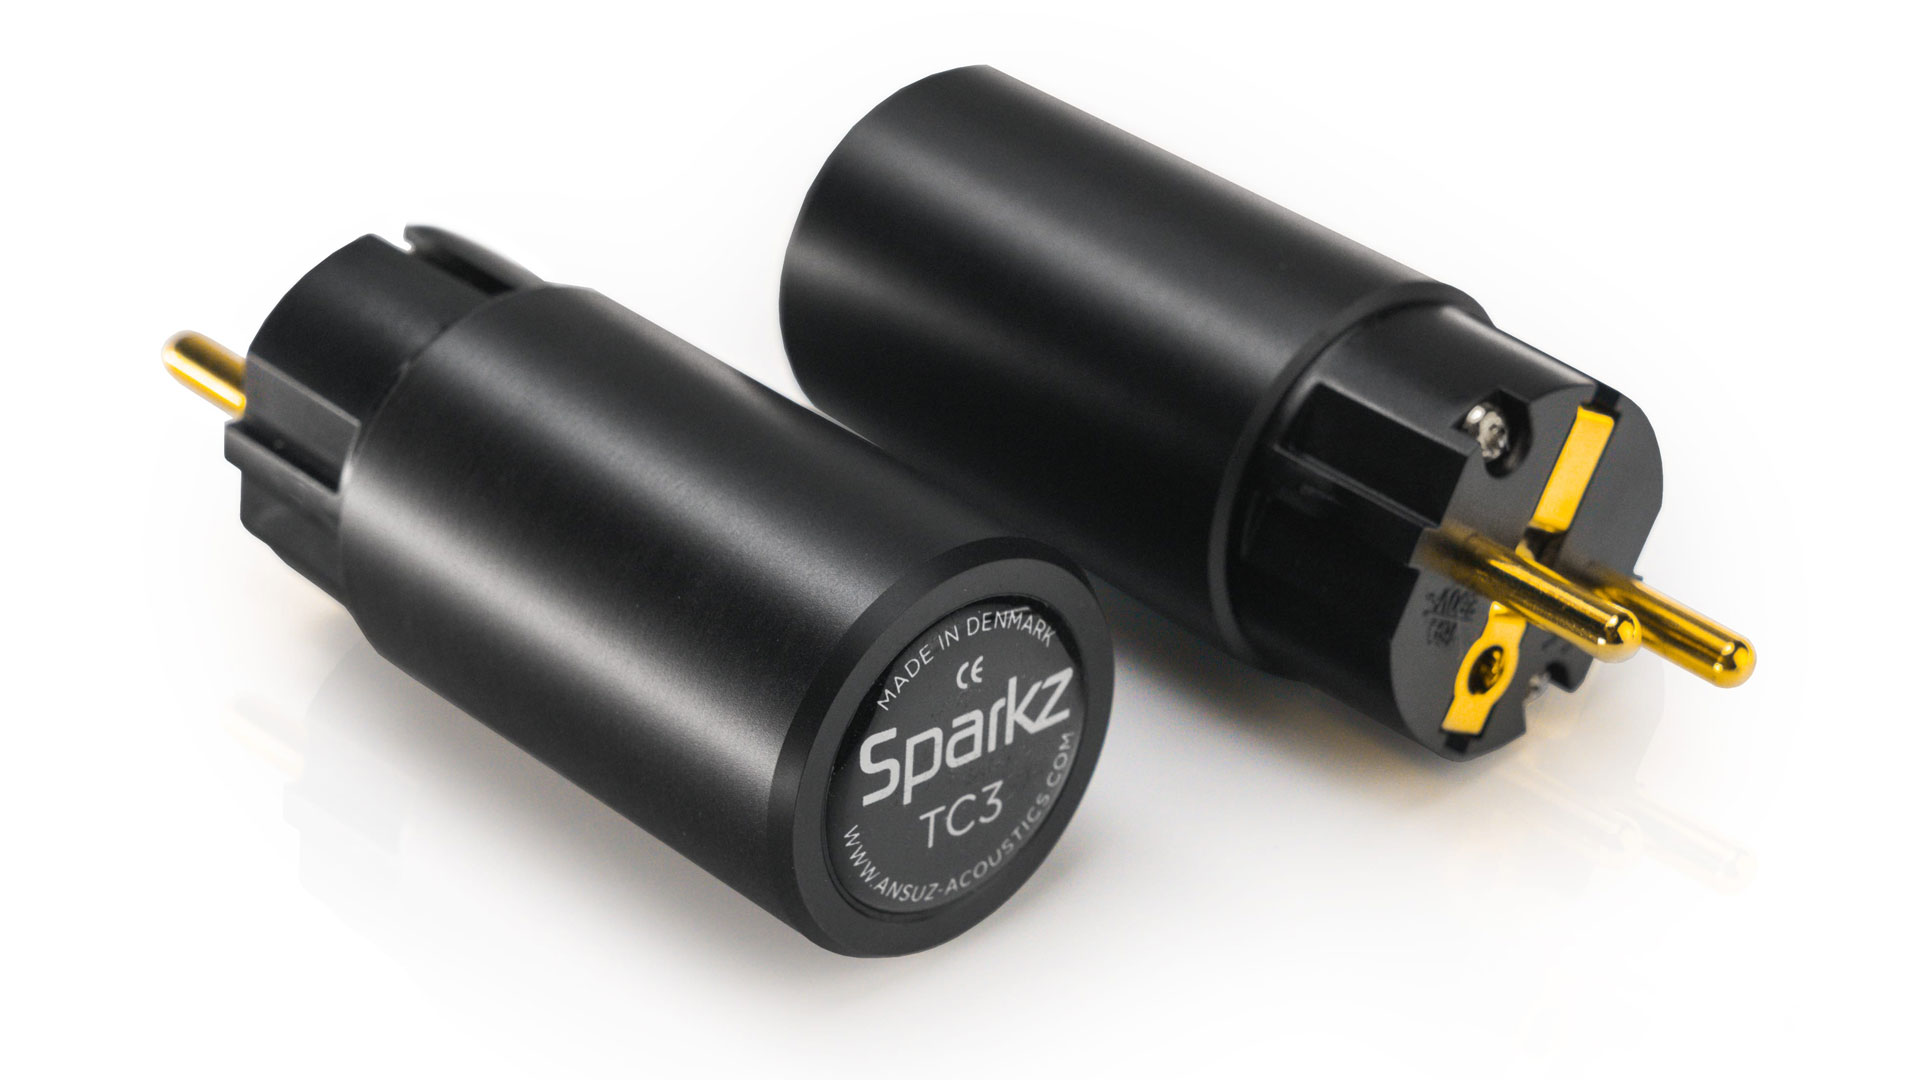 The new anti-noise-plugs Sparkz TC3 by Ansuz (Image Credit: Ansuz)